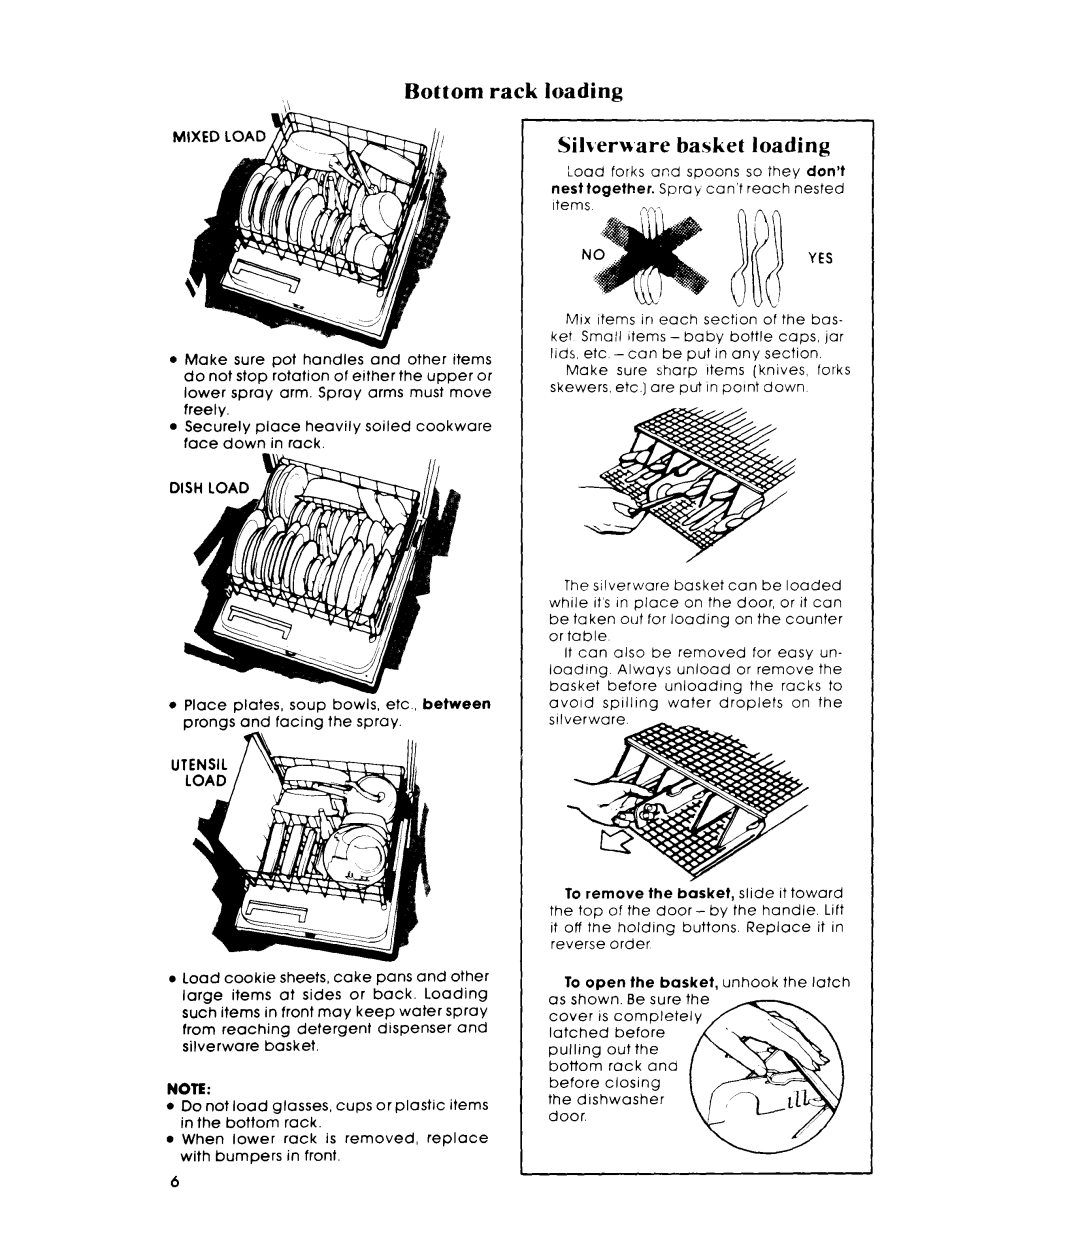 Whirlpool DU4000XR manual Bottom rack loading Silverware basket loading 